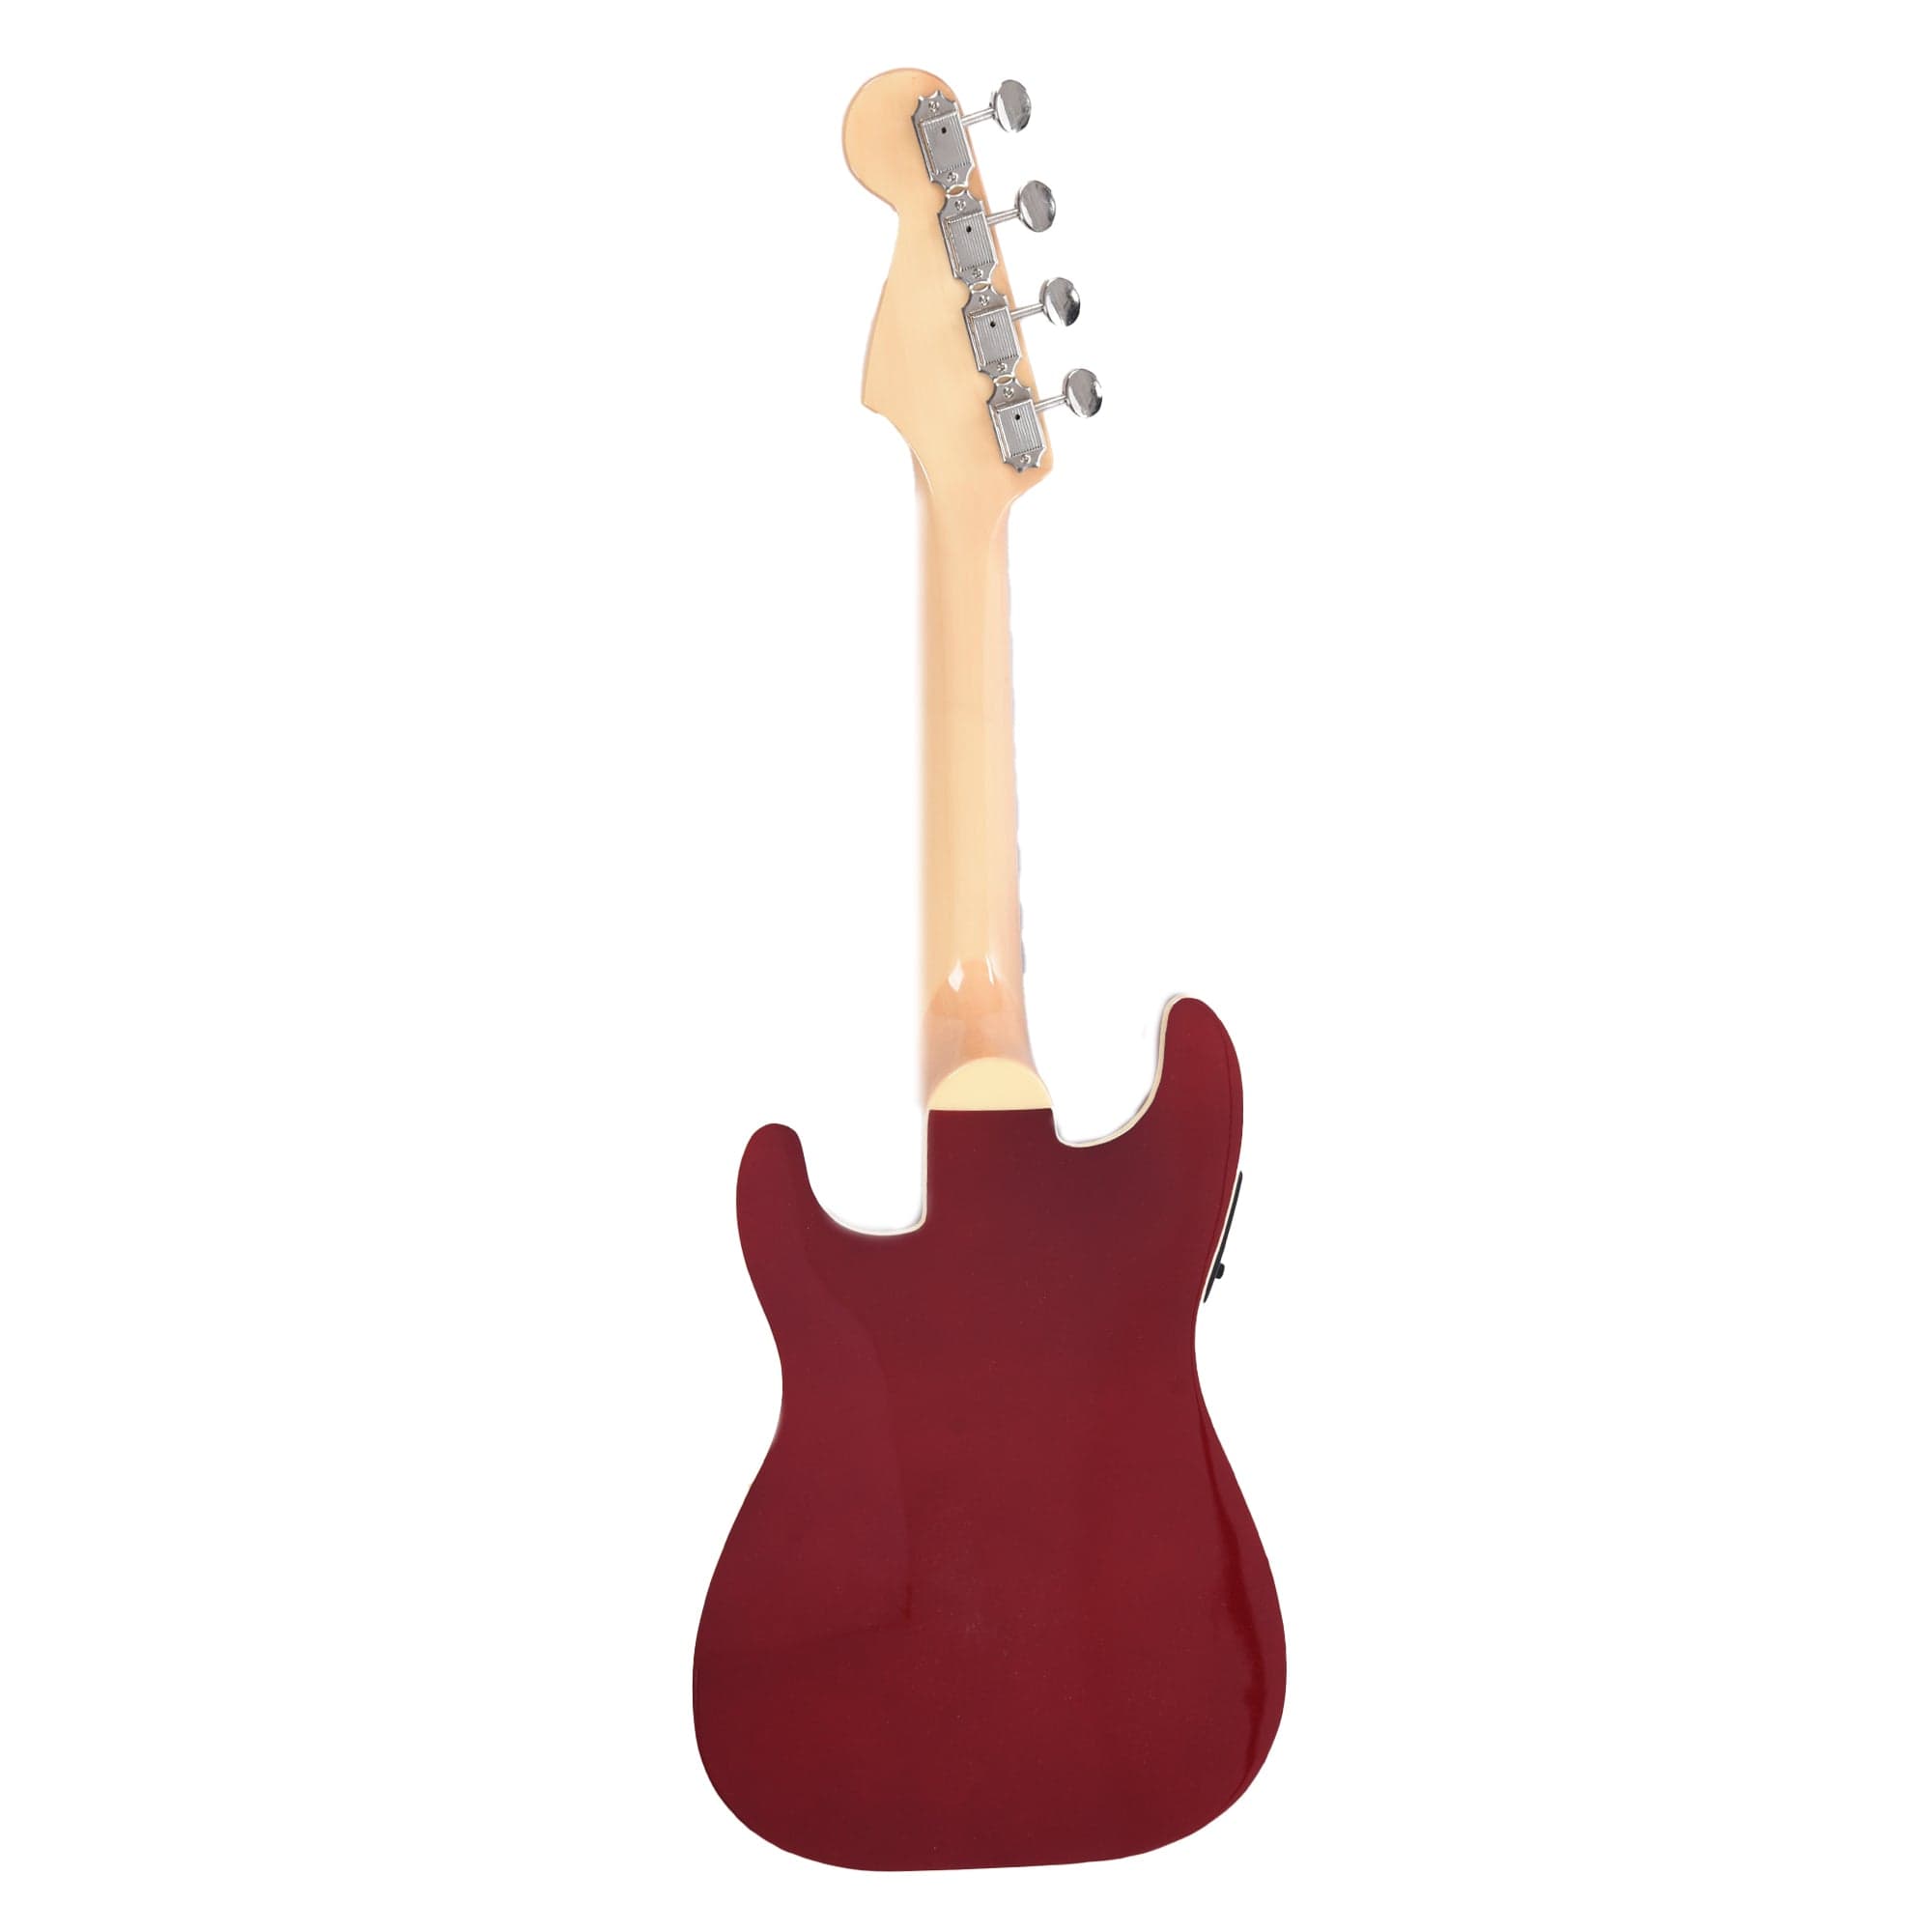 Fender Fullerton Stratocaster Ukulele Candy Apple Red Folk Instruments / Ukuleles